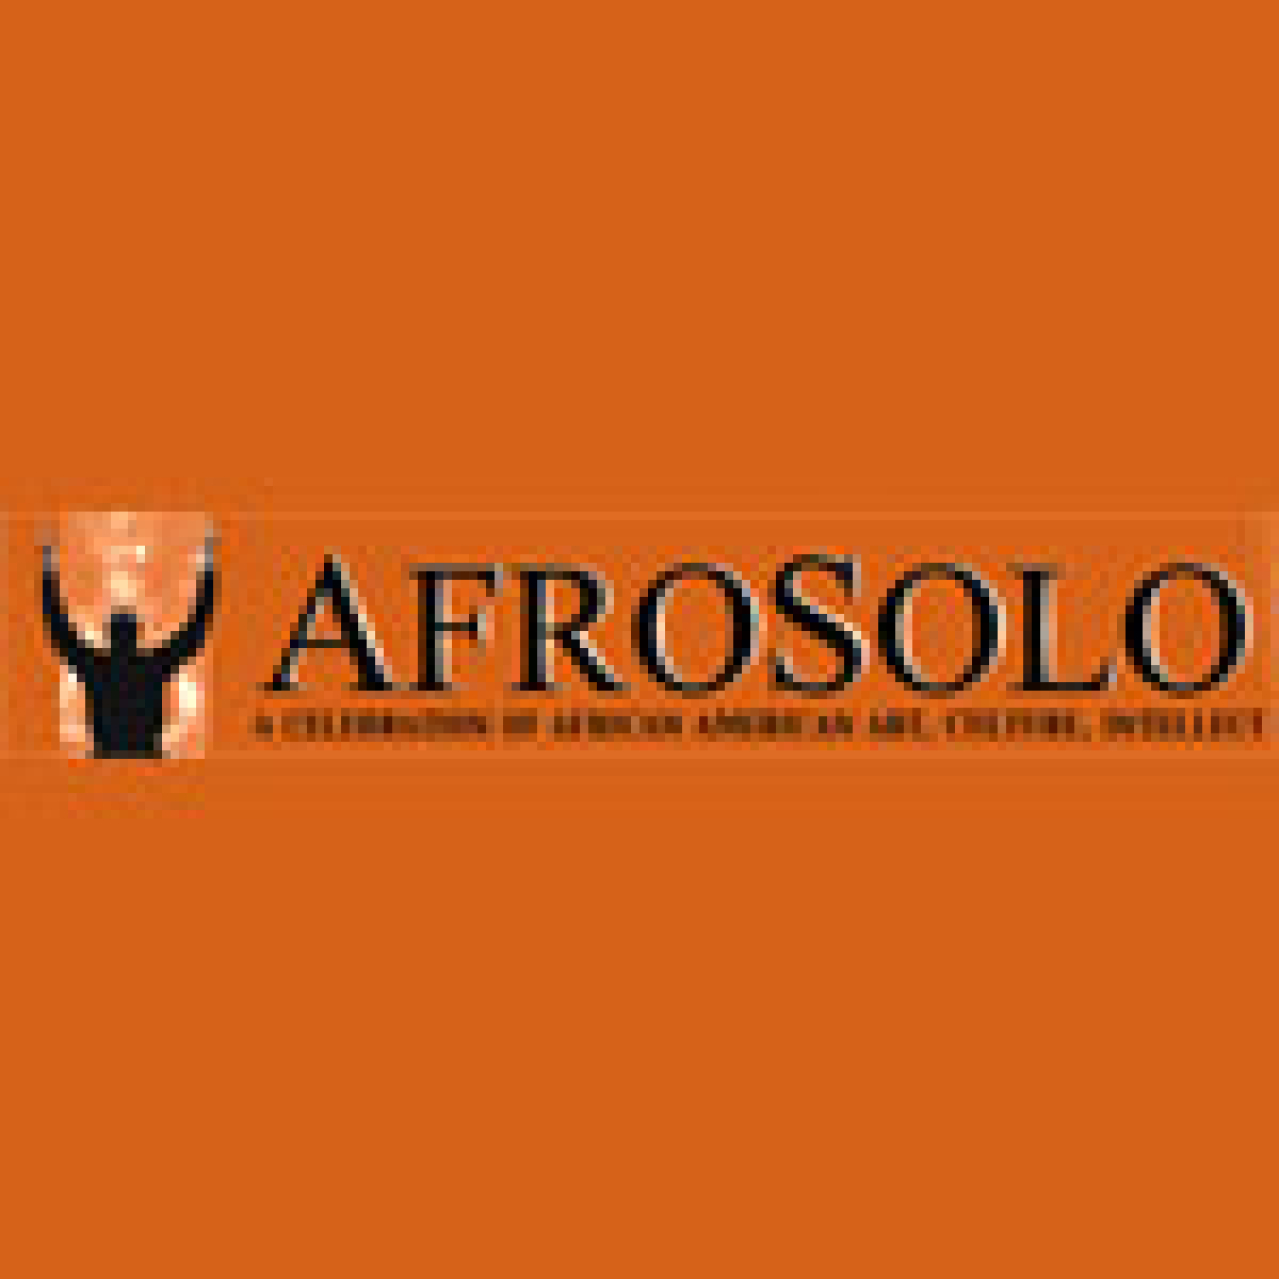 afrosolo arts festival xiii united in health logo 27320